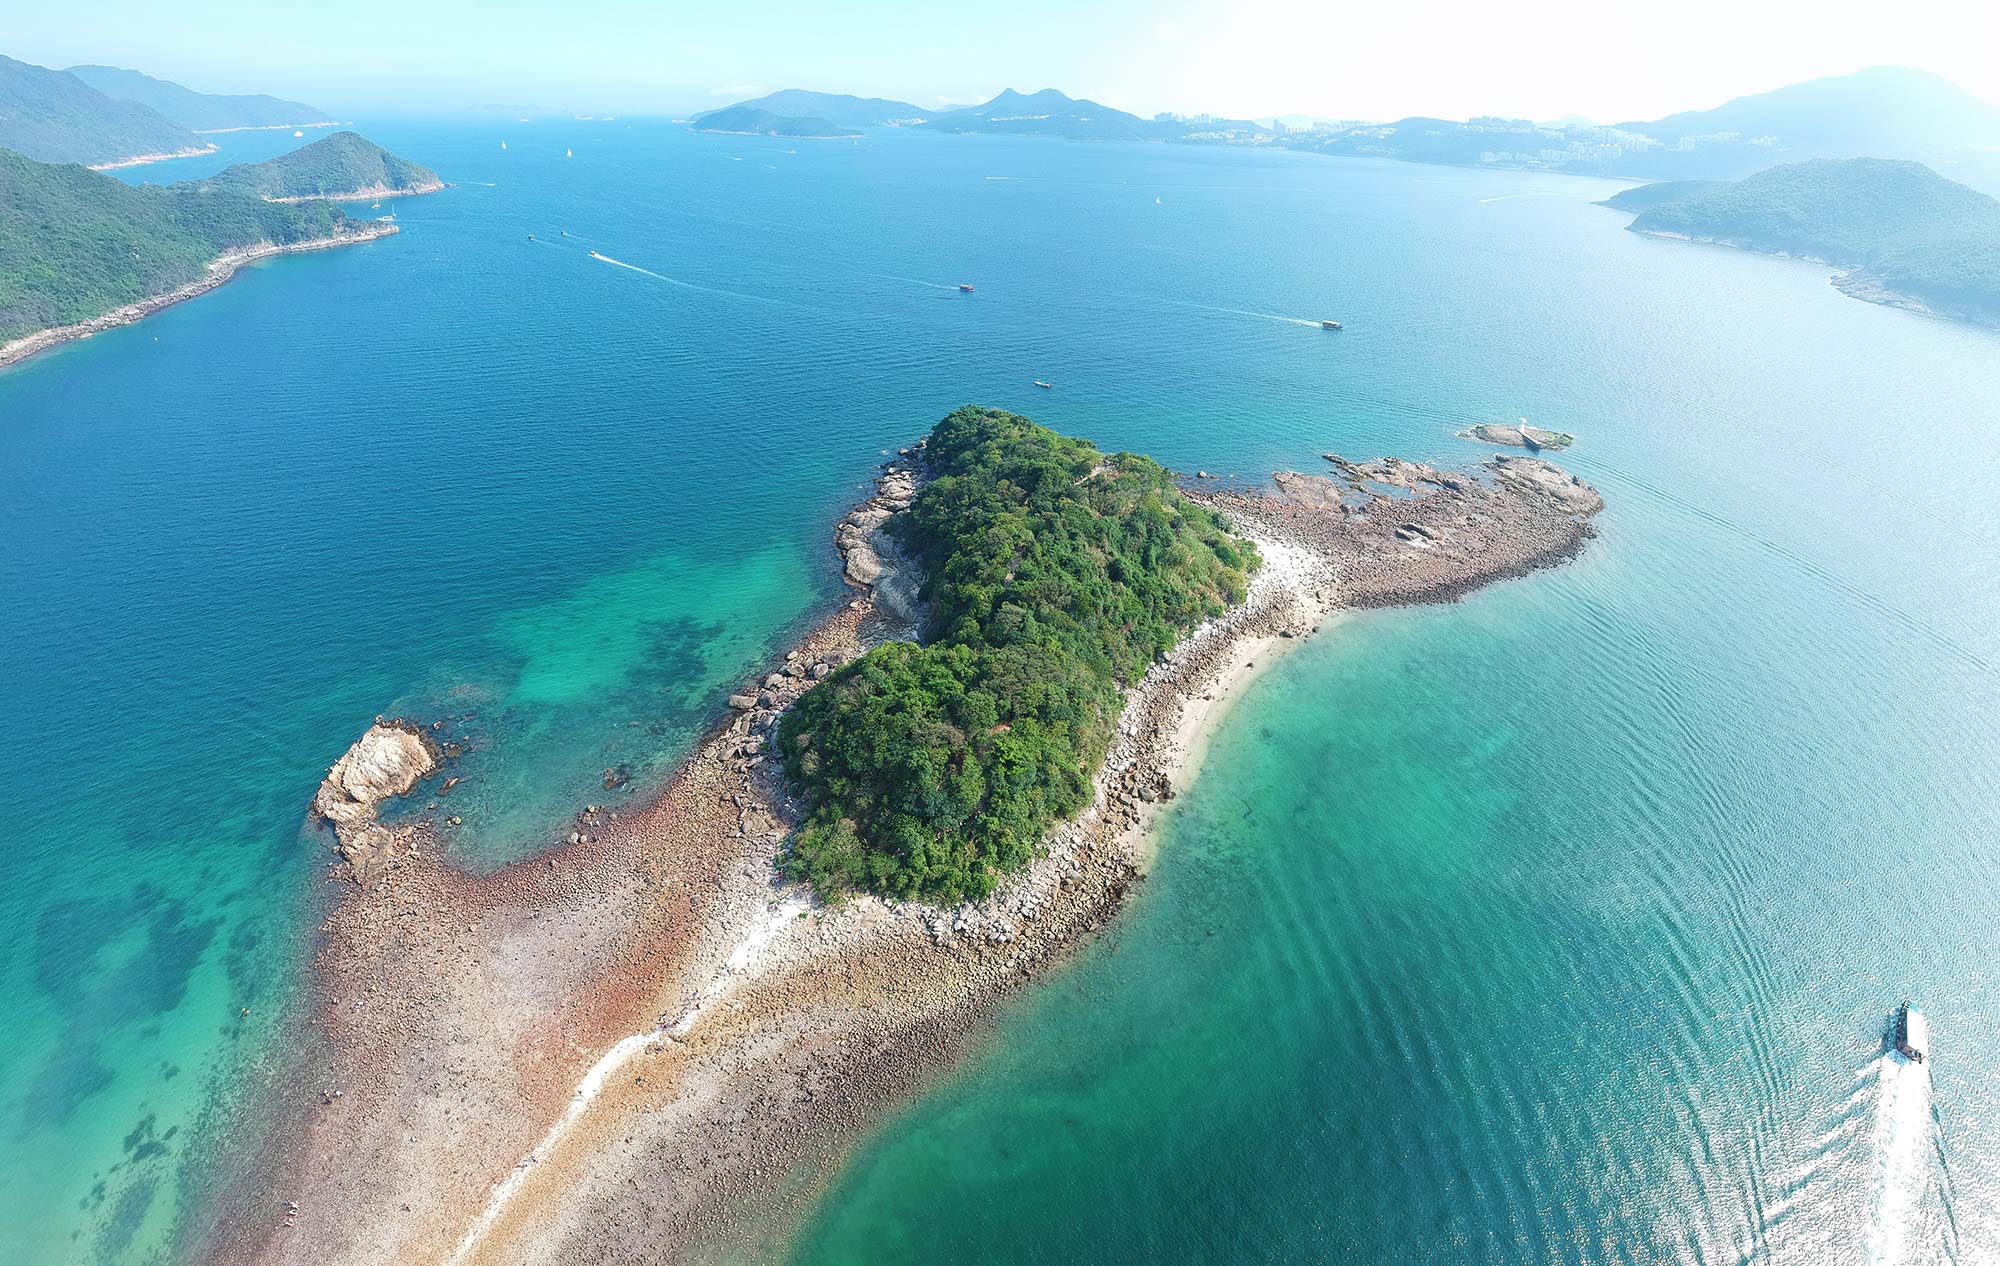 Aerial view of Sharp Island, one of Hong Kong's secret islands